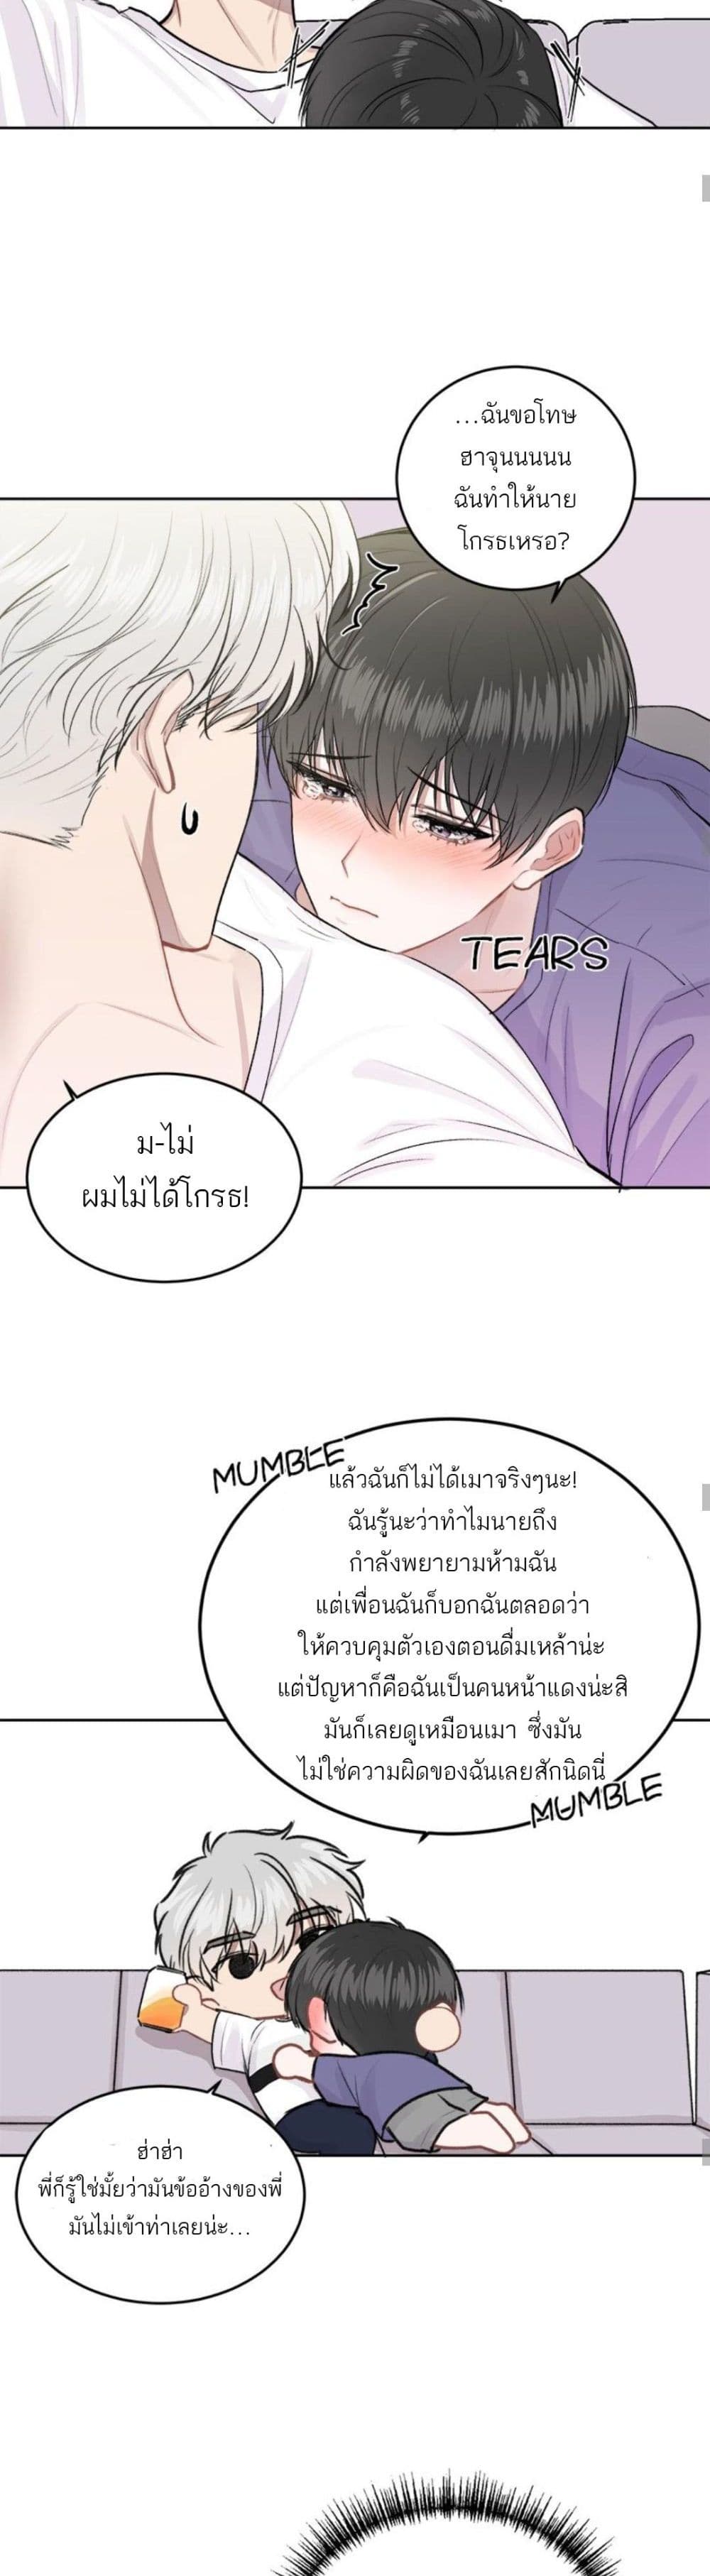 Don’t Cry, Sunbae! 6 (13)